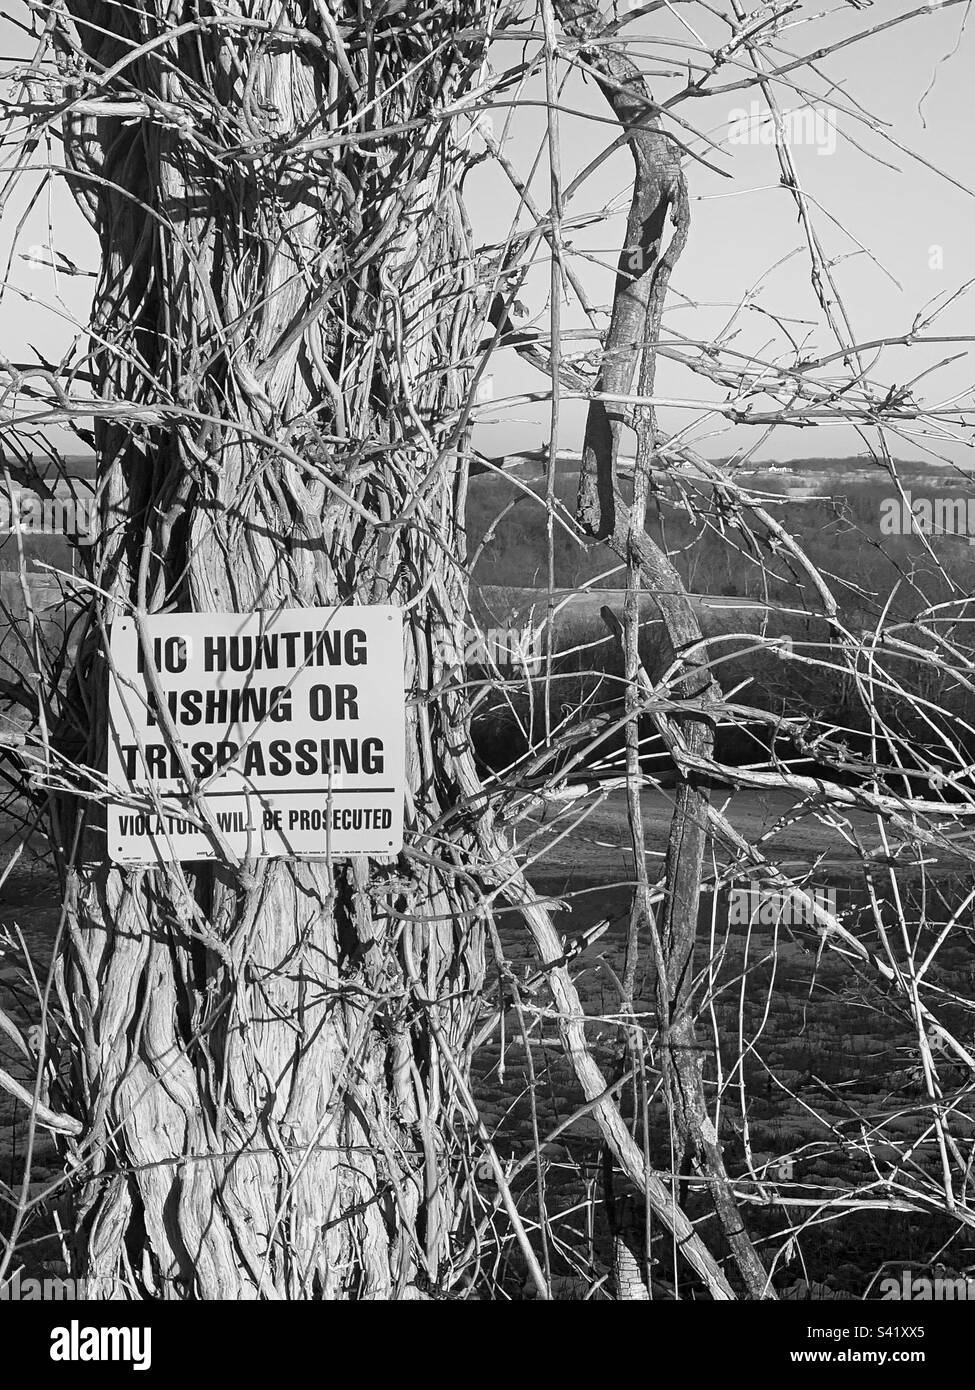 No trespassing sign Stock Photo